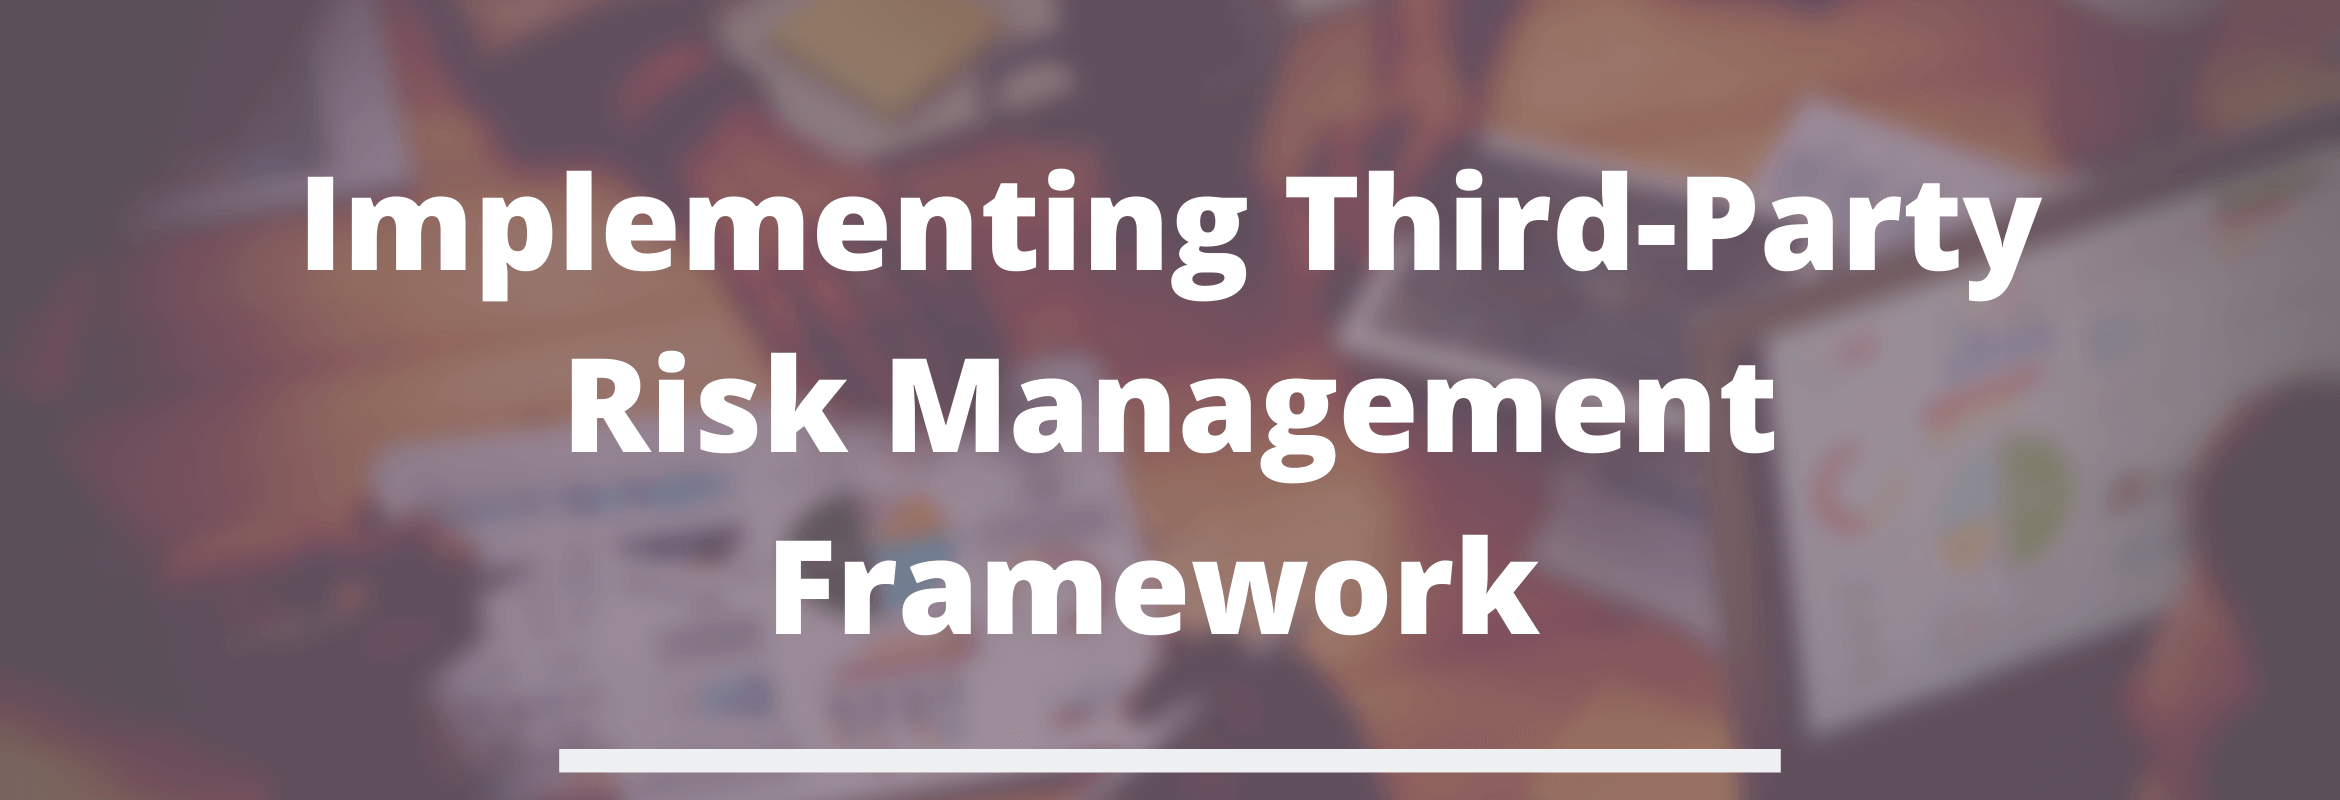 Third-Party Risk Management Framework